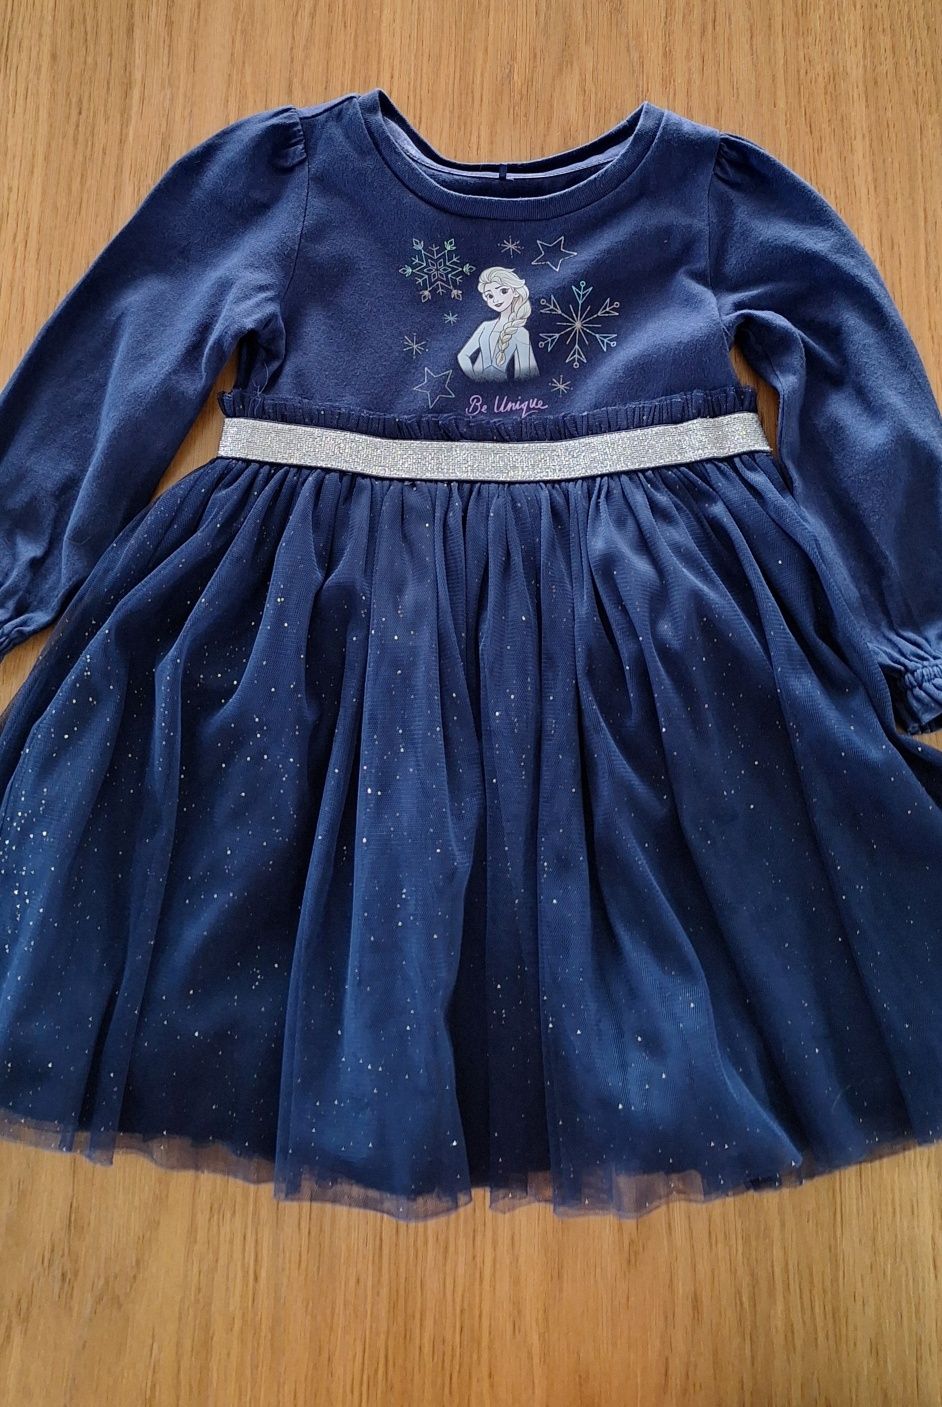 Granatowa sukienka z tiulem z Elsa 92 / 98